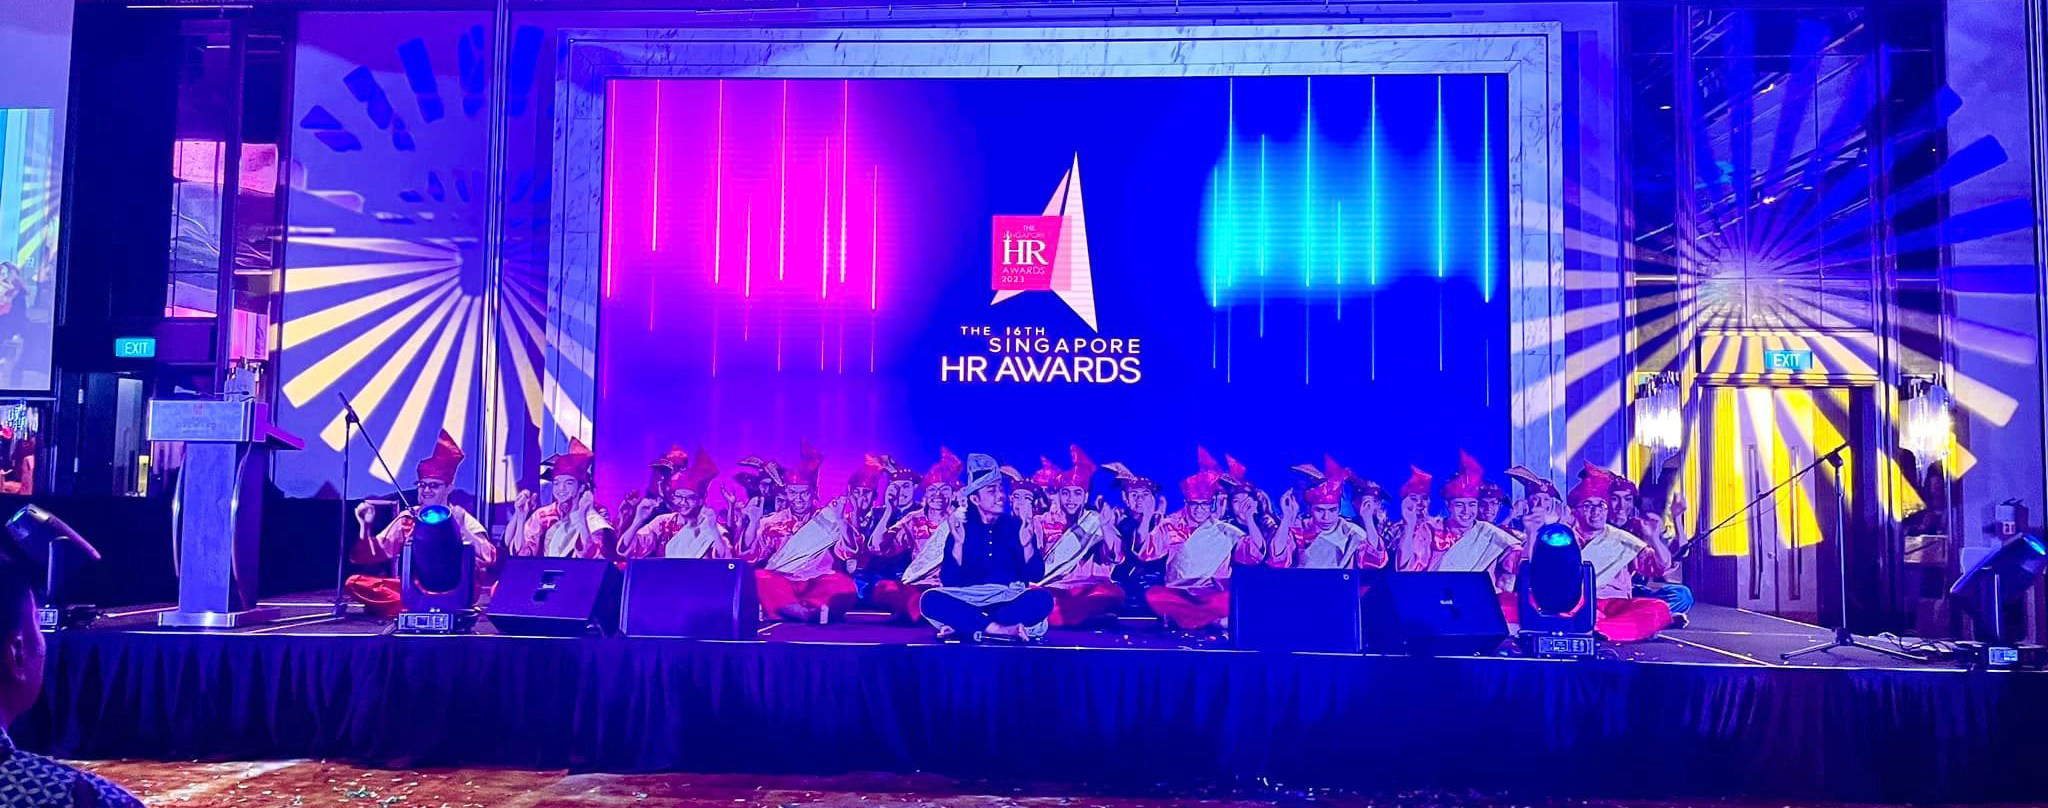 Singapore HR Awards